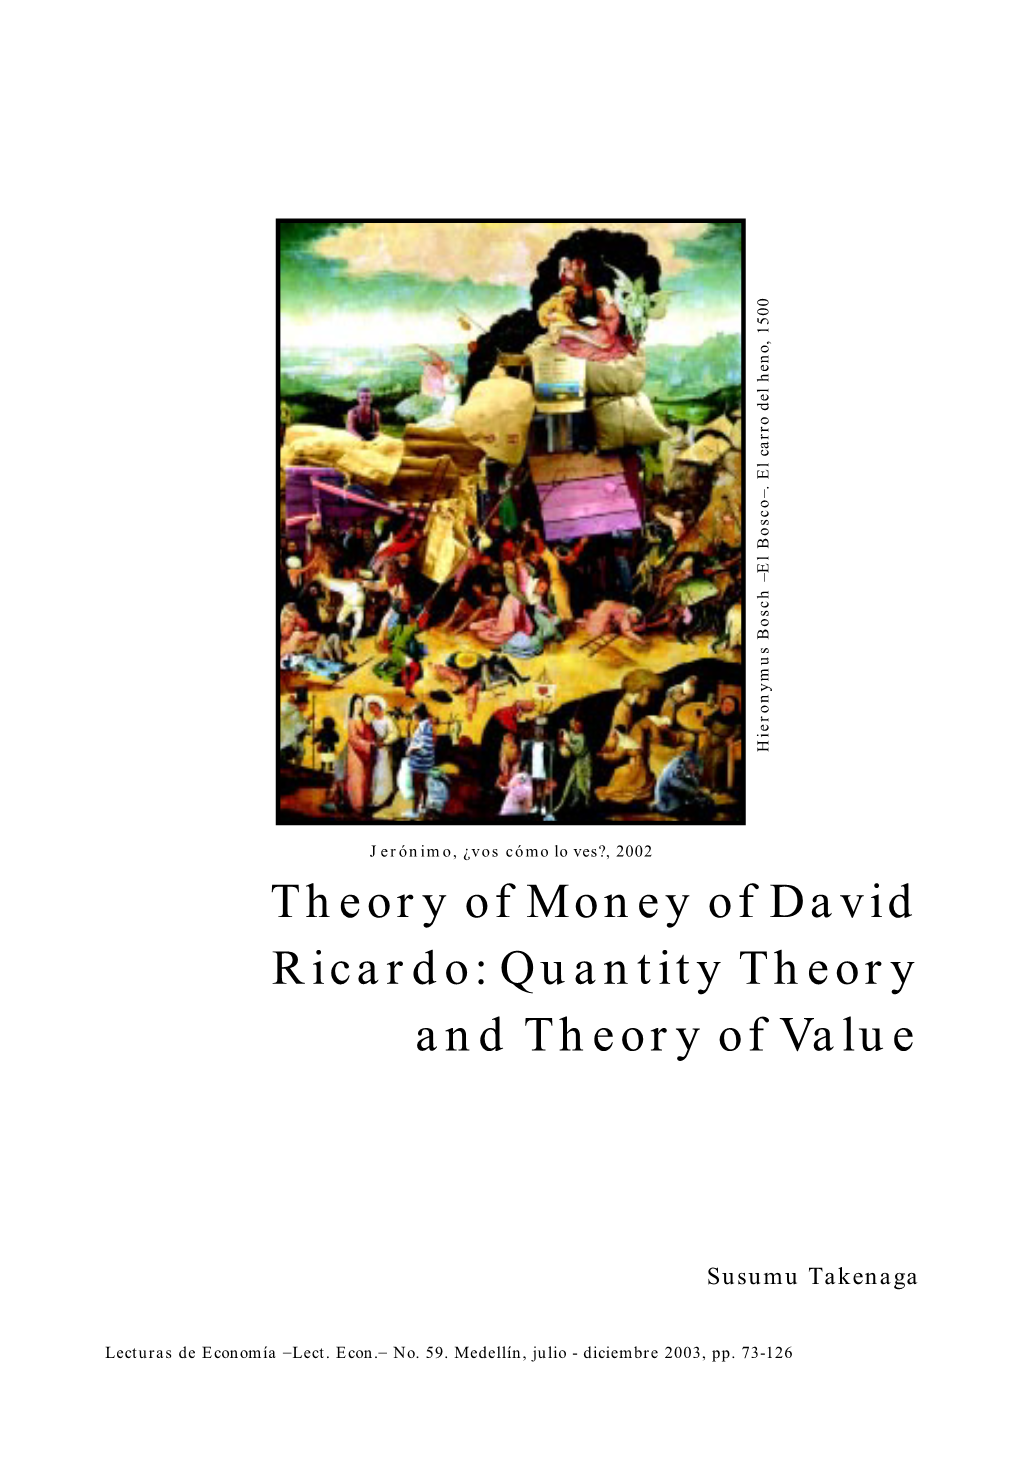 Theory of Money of David Ricardo: Quantity Theory and Theory of Value